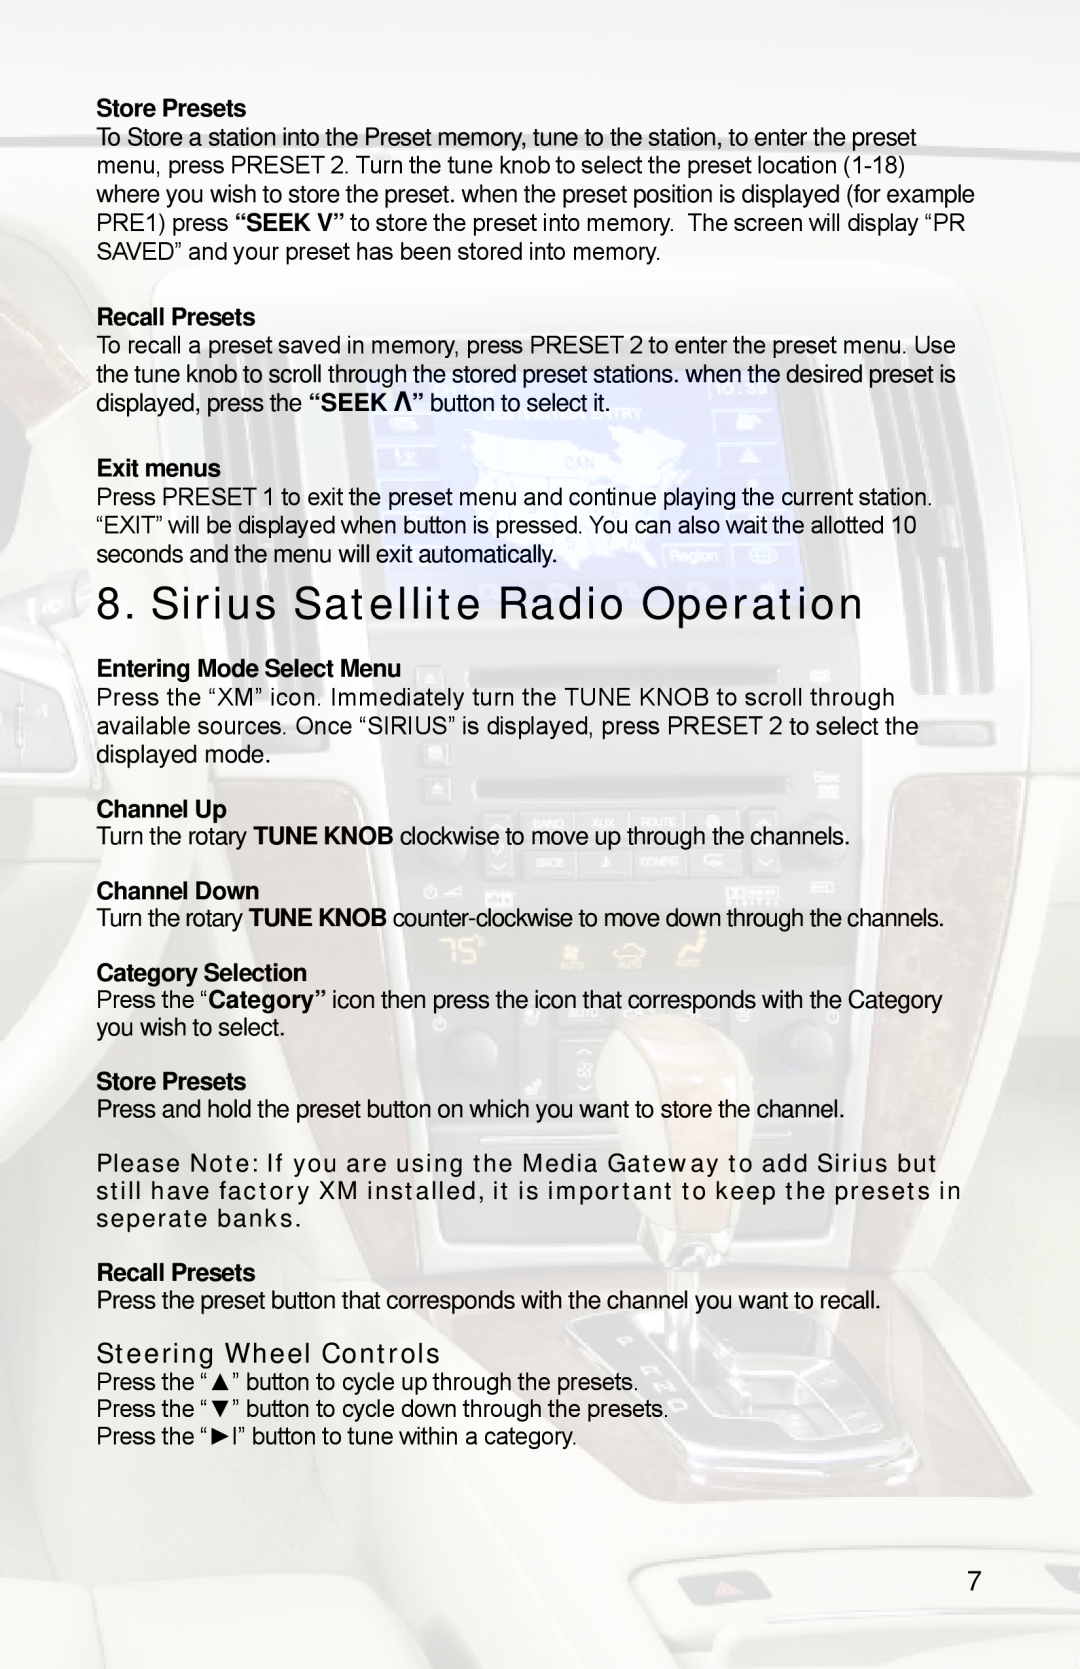 iSimple PGHGM4 owner manual Sirius Satellite Radio Operation, Steering Wheel Controls 